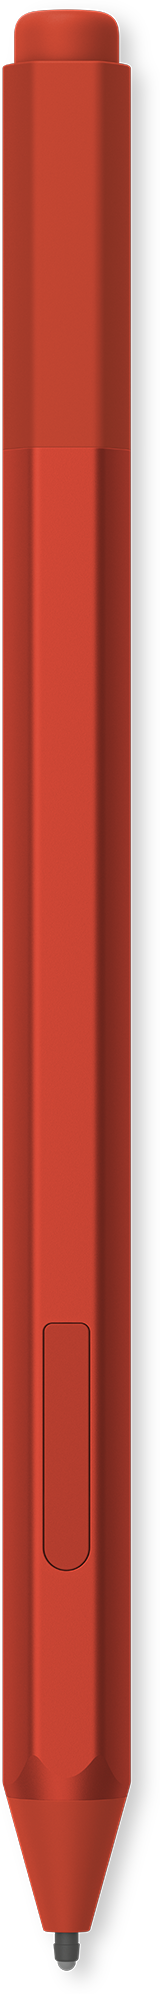 Microsoft Surface Pen - M1776 - Poppy Red